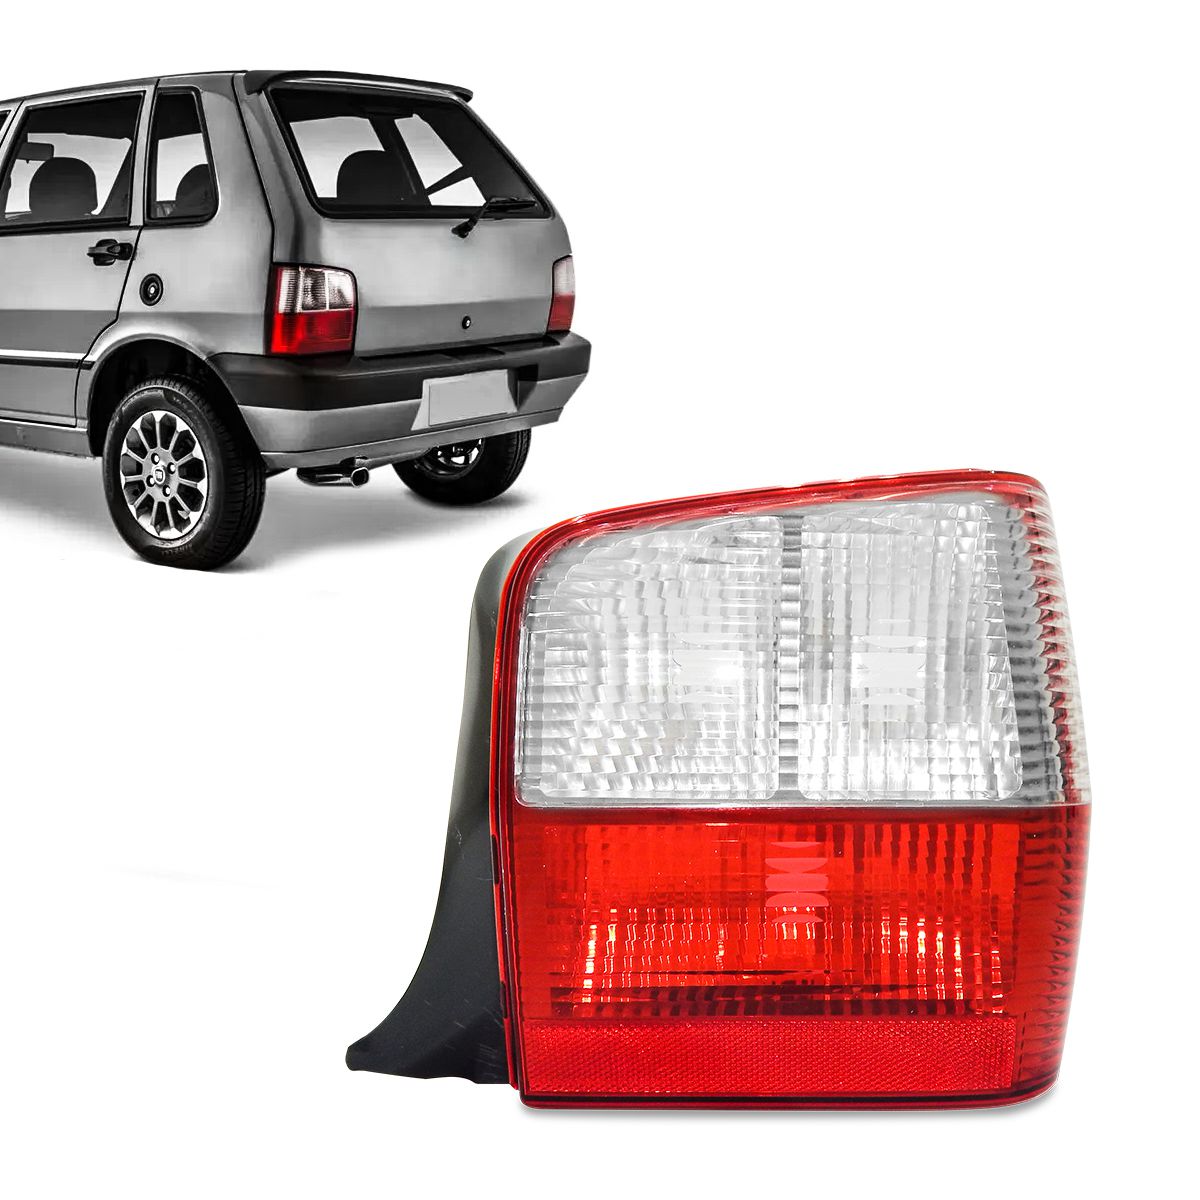 Lanterna traseira Fiat Uno 2004 a 2010 Rubi/Cristal - Delivery Peças |  Acessórios Automotivos